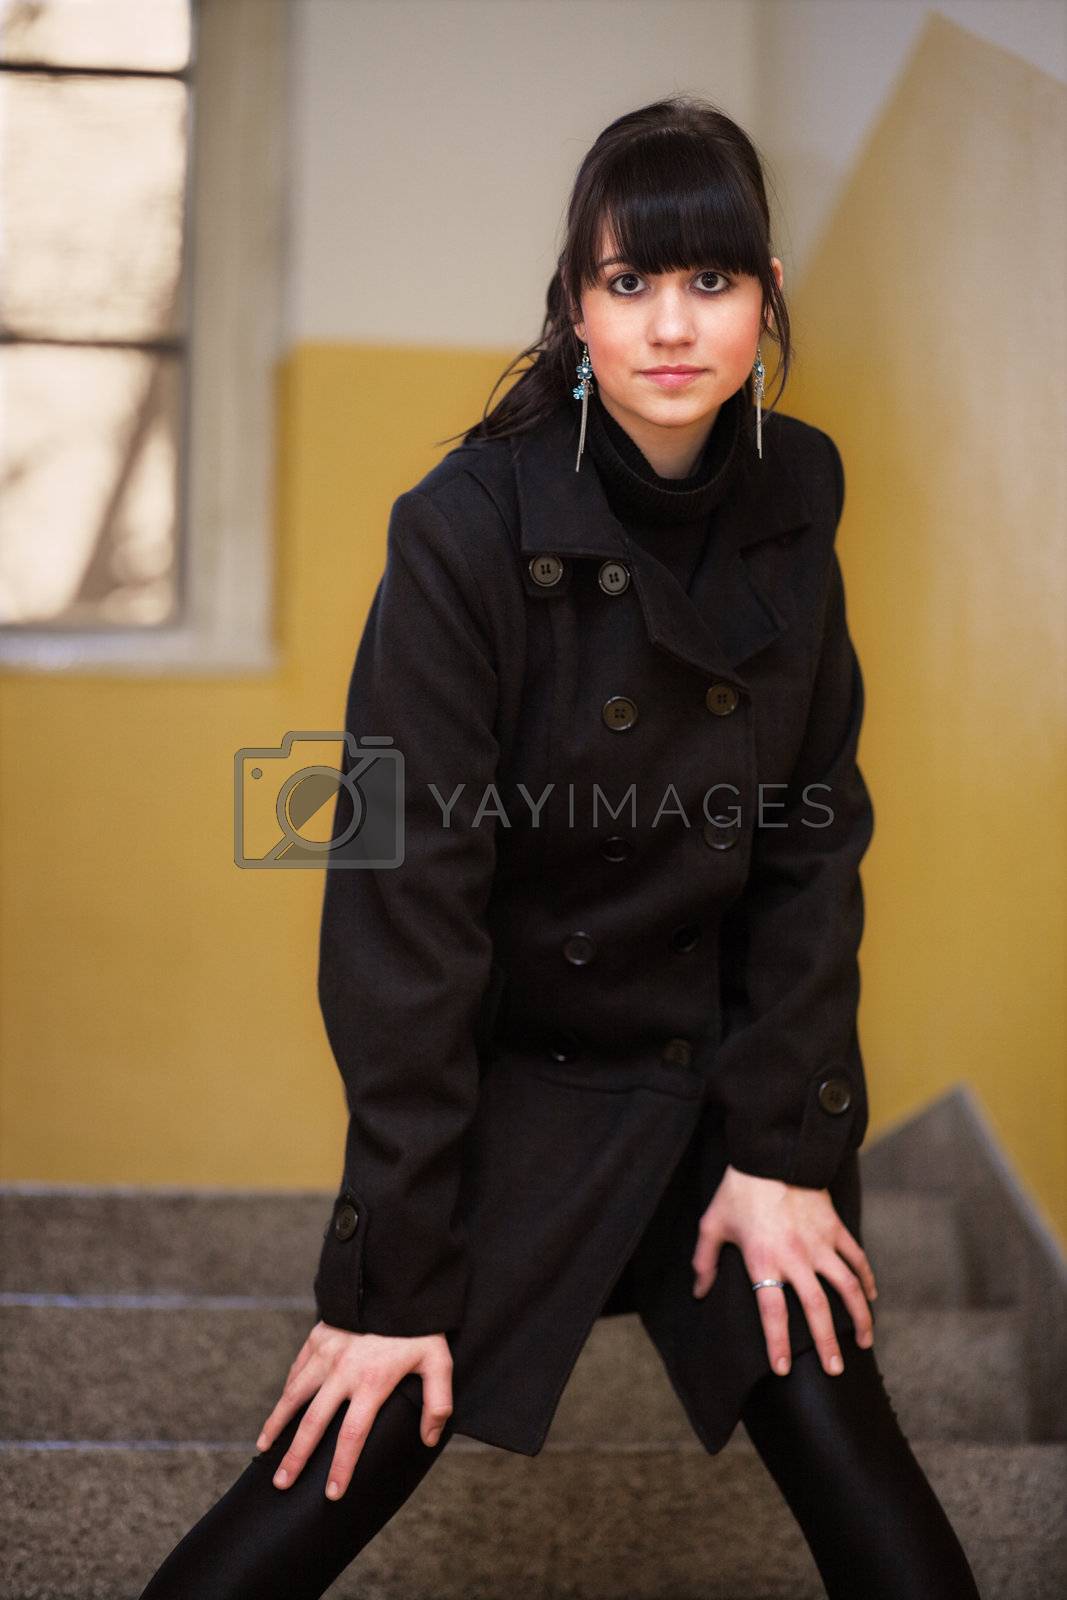 Royalty free image of brunette girl by MikLav